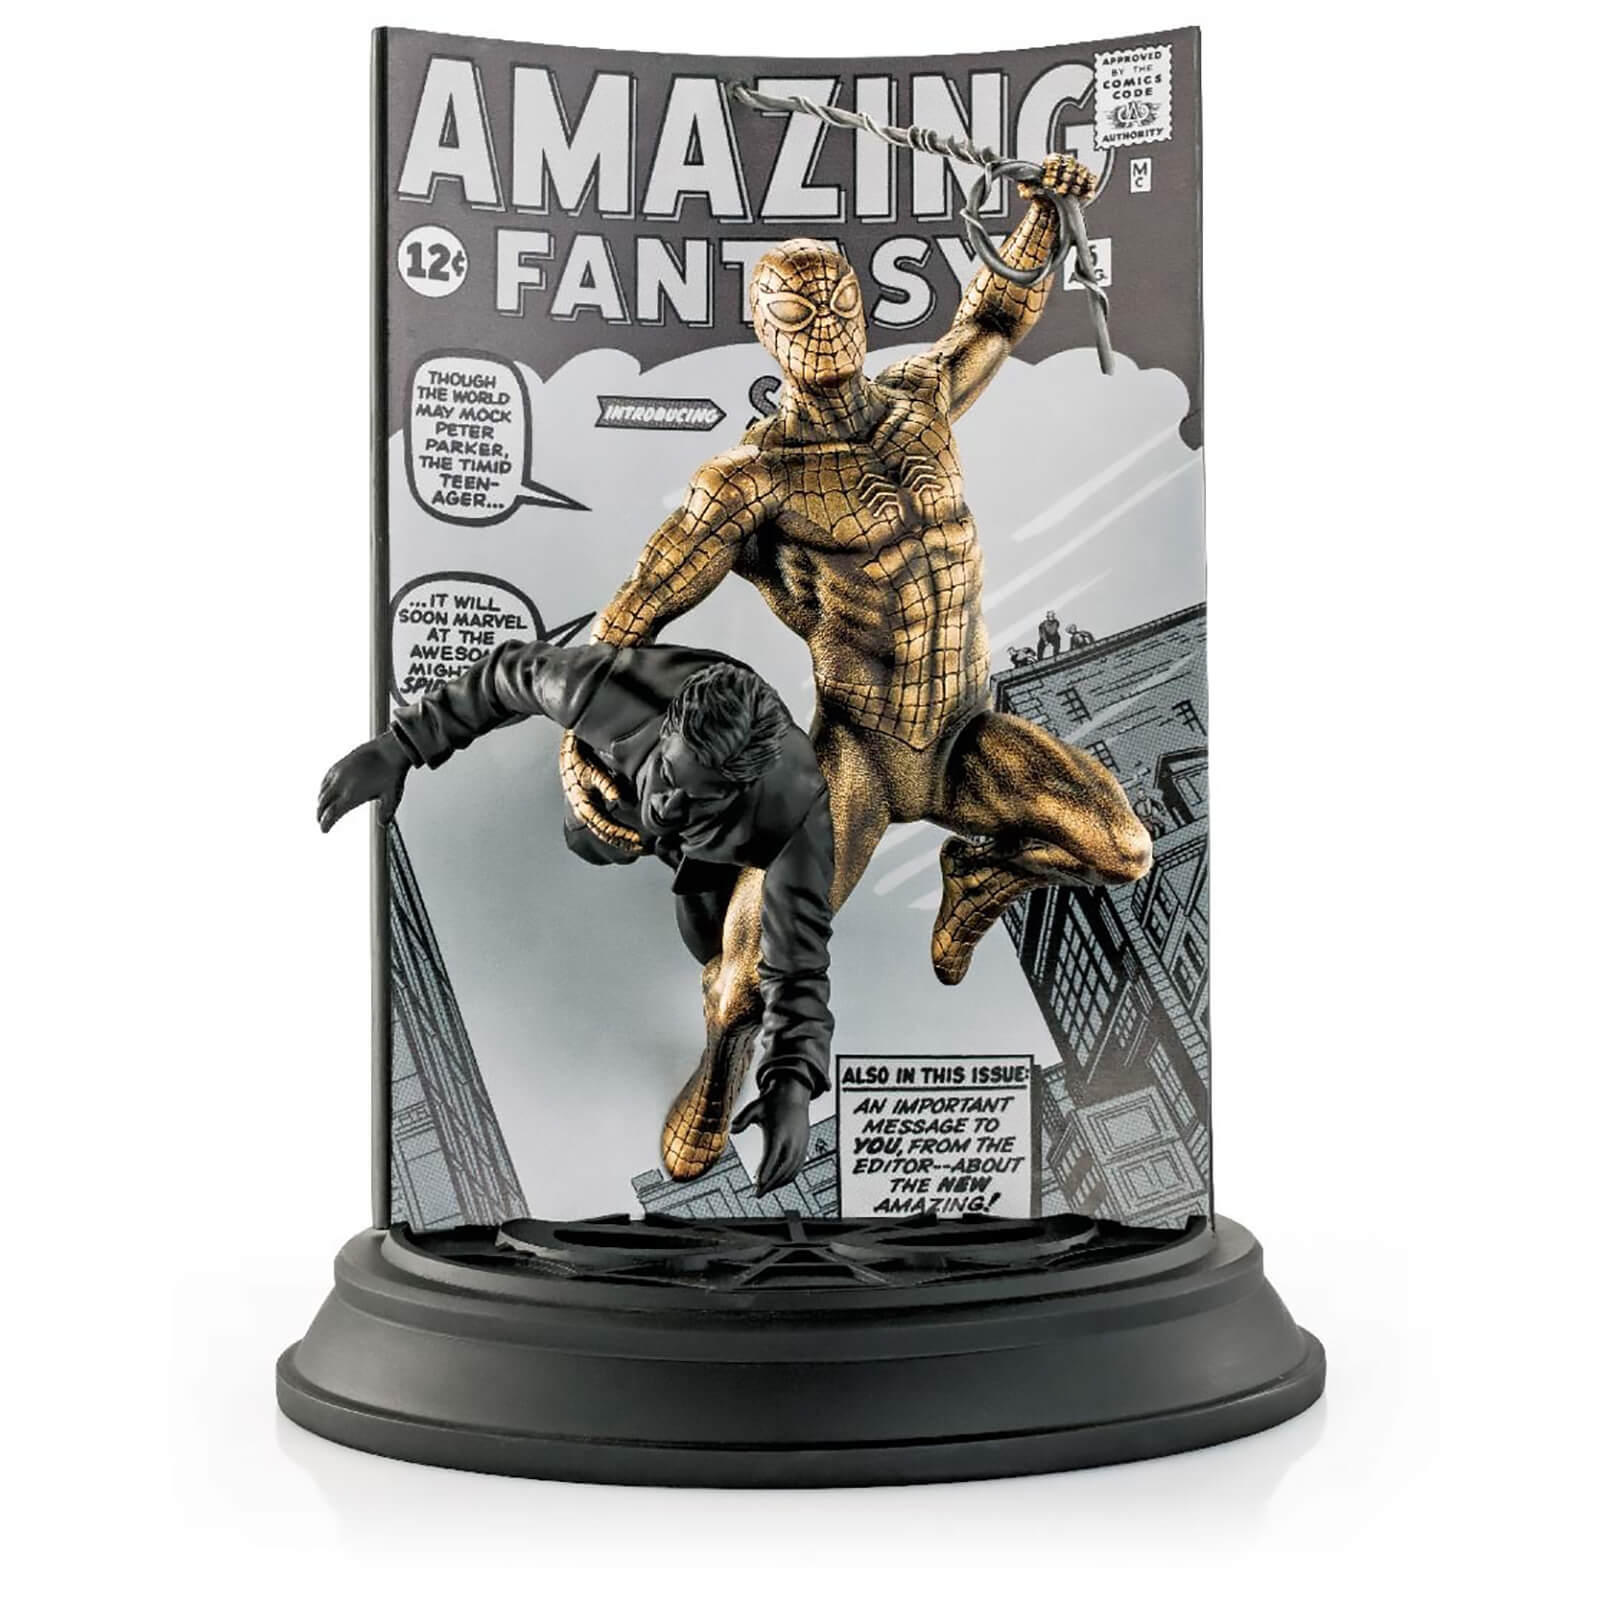 Royal Selangor Spider-Man Amazing Fantasy #15 Gold Version Limited Edition Statue (200 Worldwide)